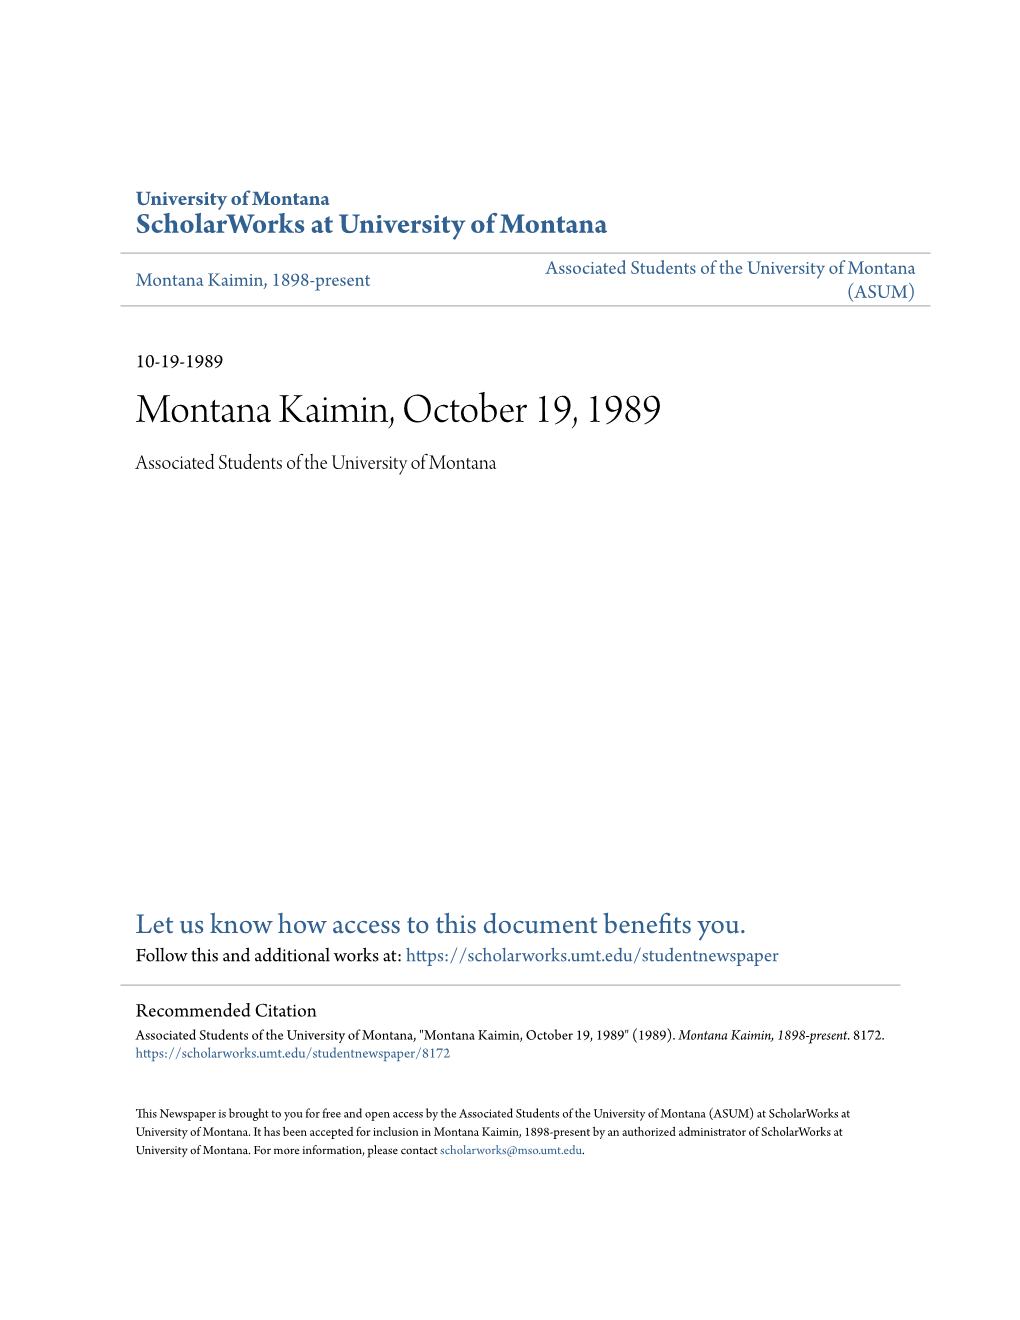 Montana Kaimin, October 19, 1989 Associated Students of the University of Montana